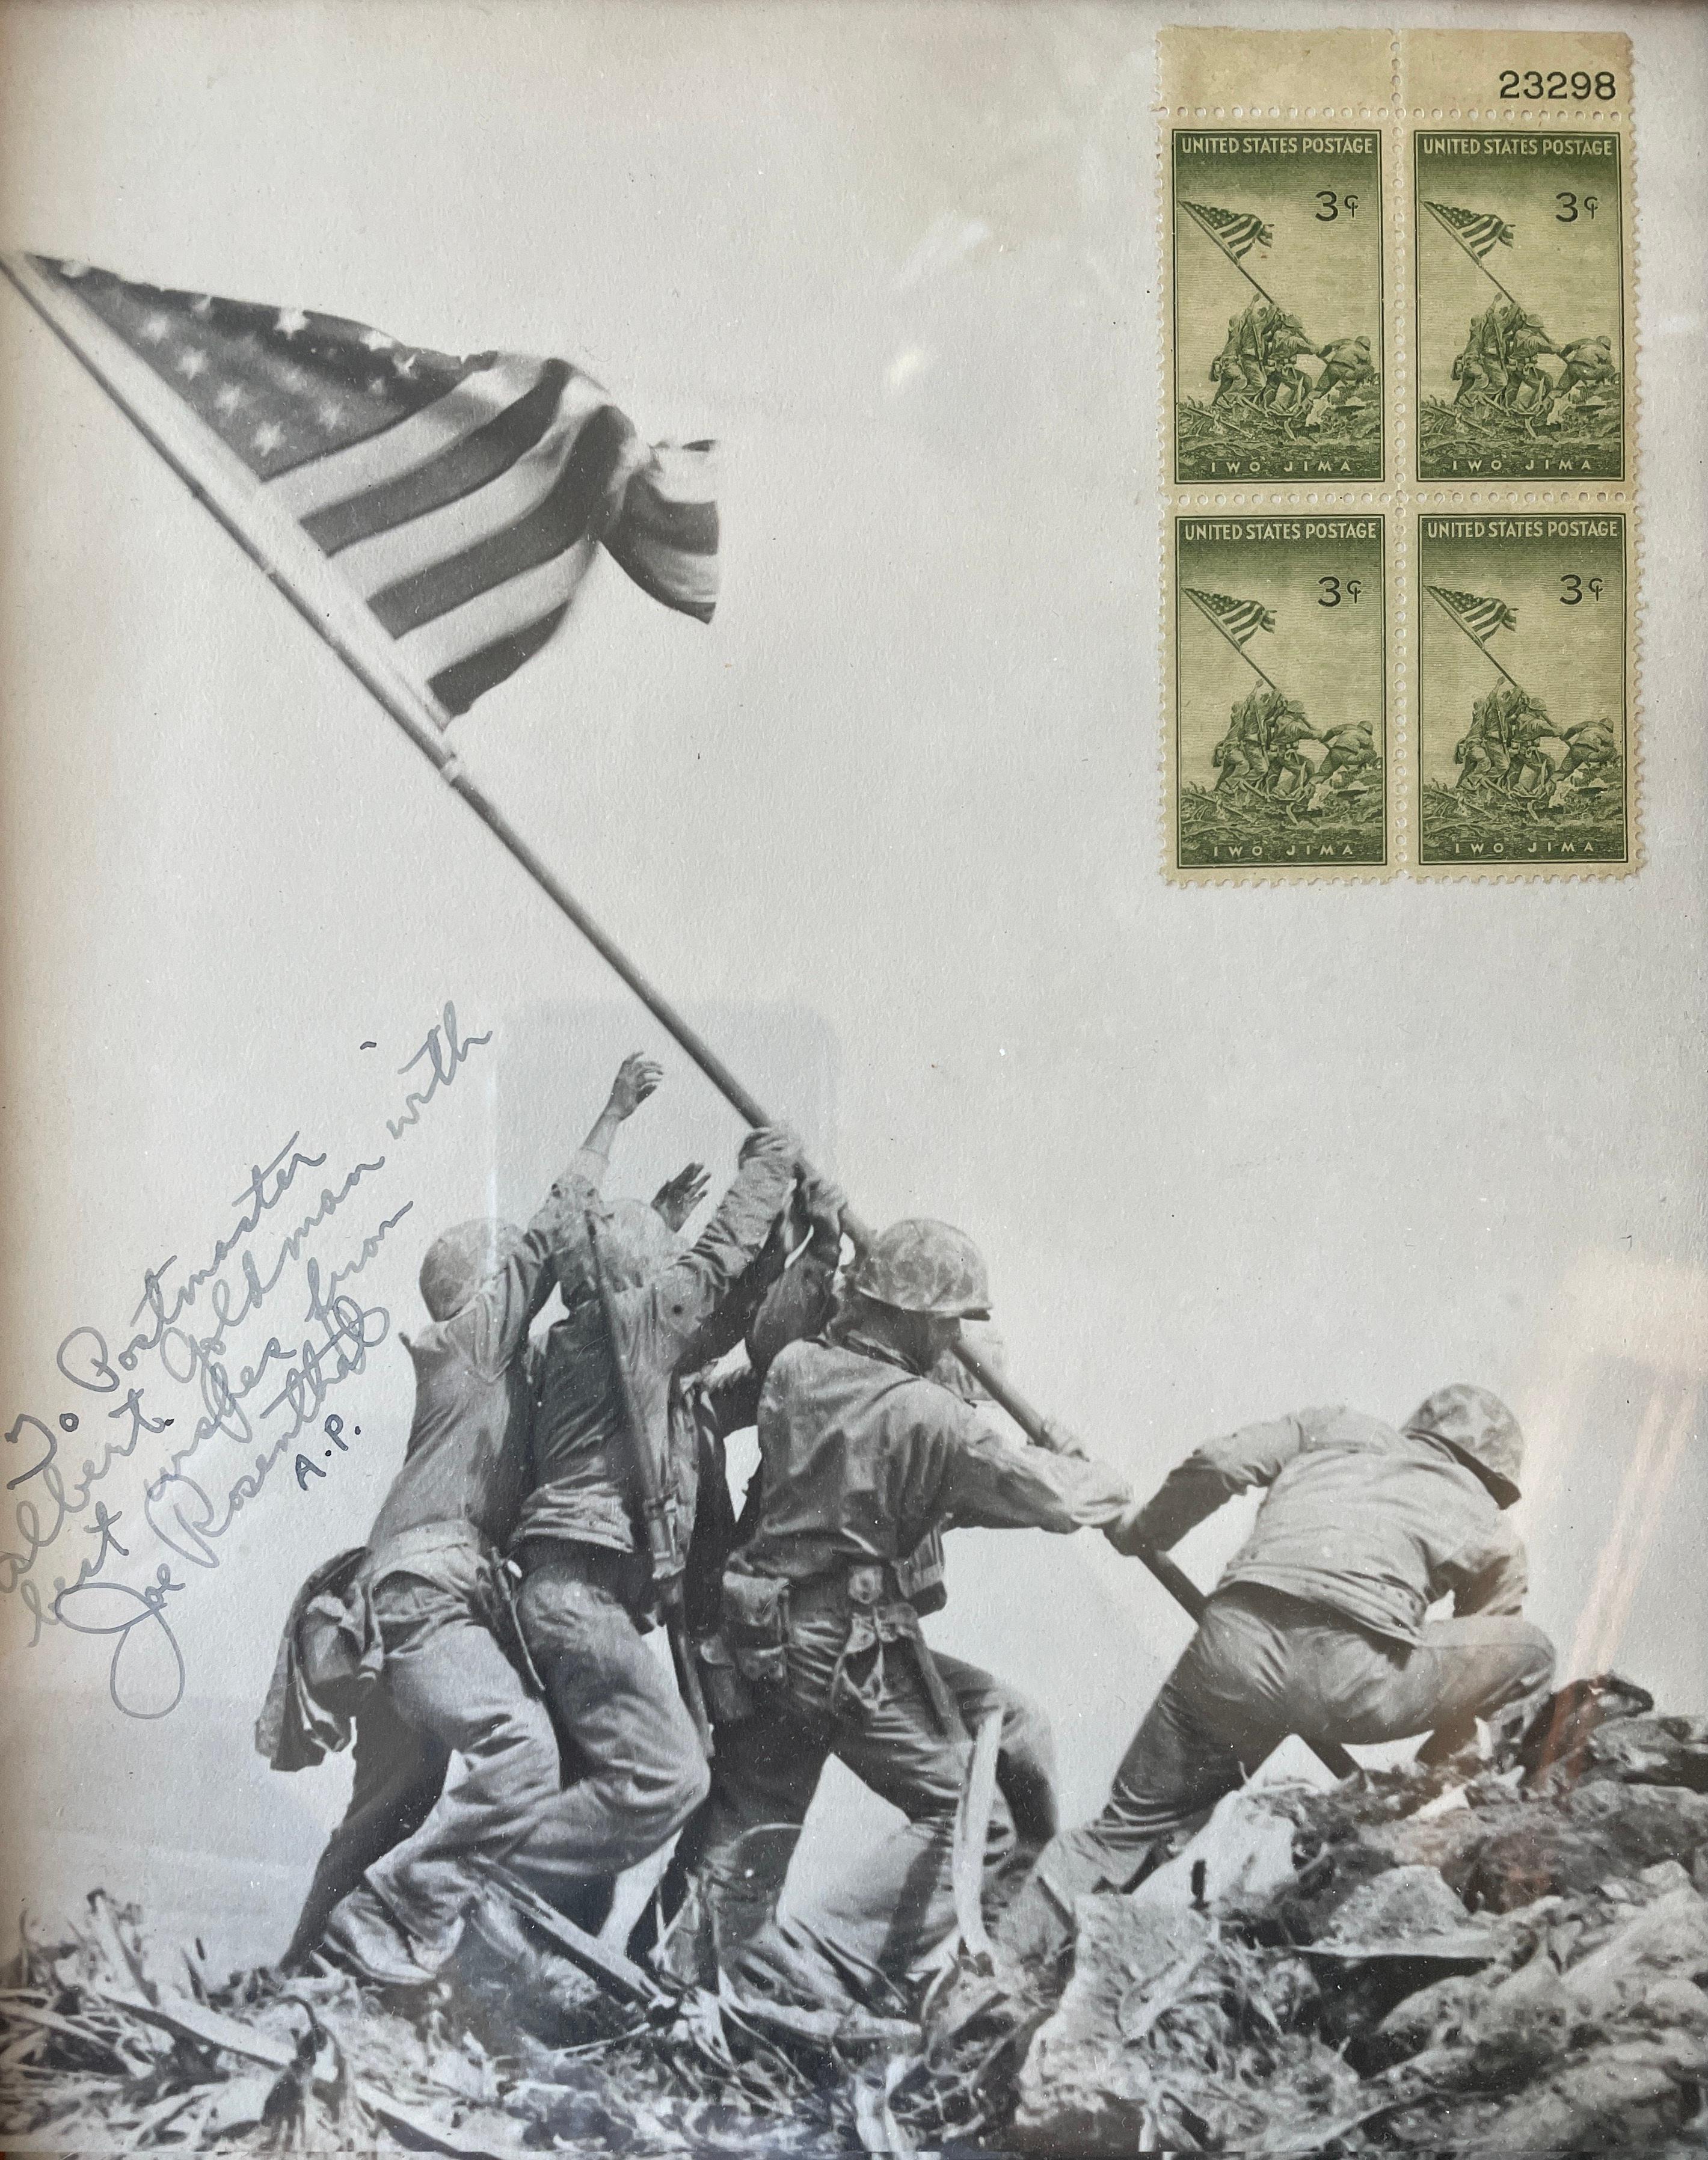 Joe Rosenthal Figurative Photograph - Signed Flag Raising at Iwo Jima, 1945